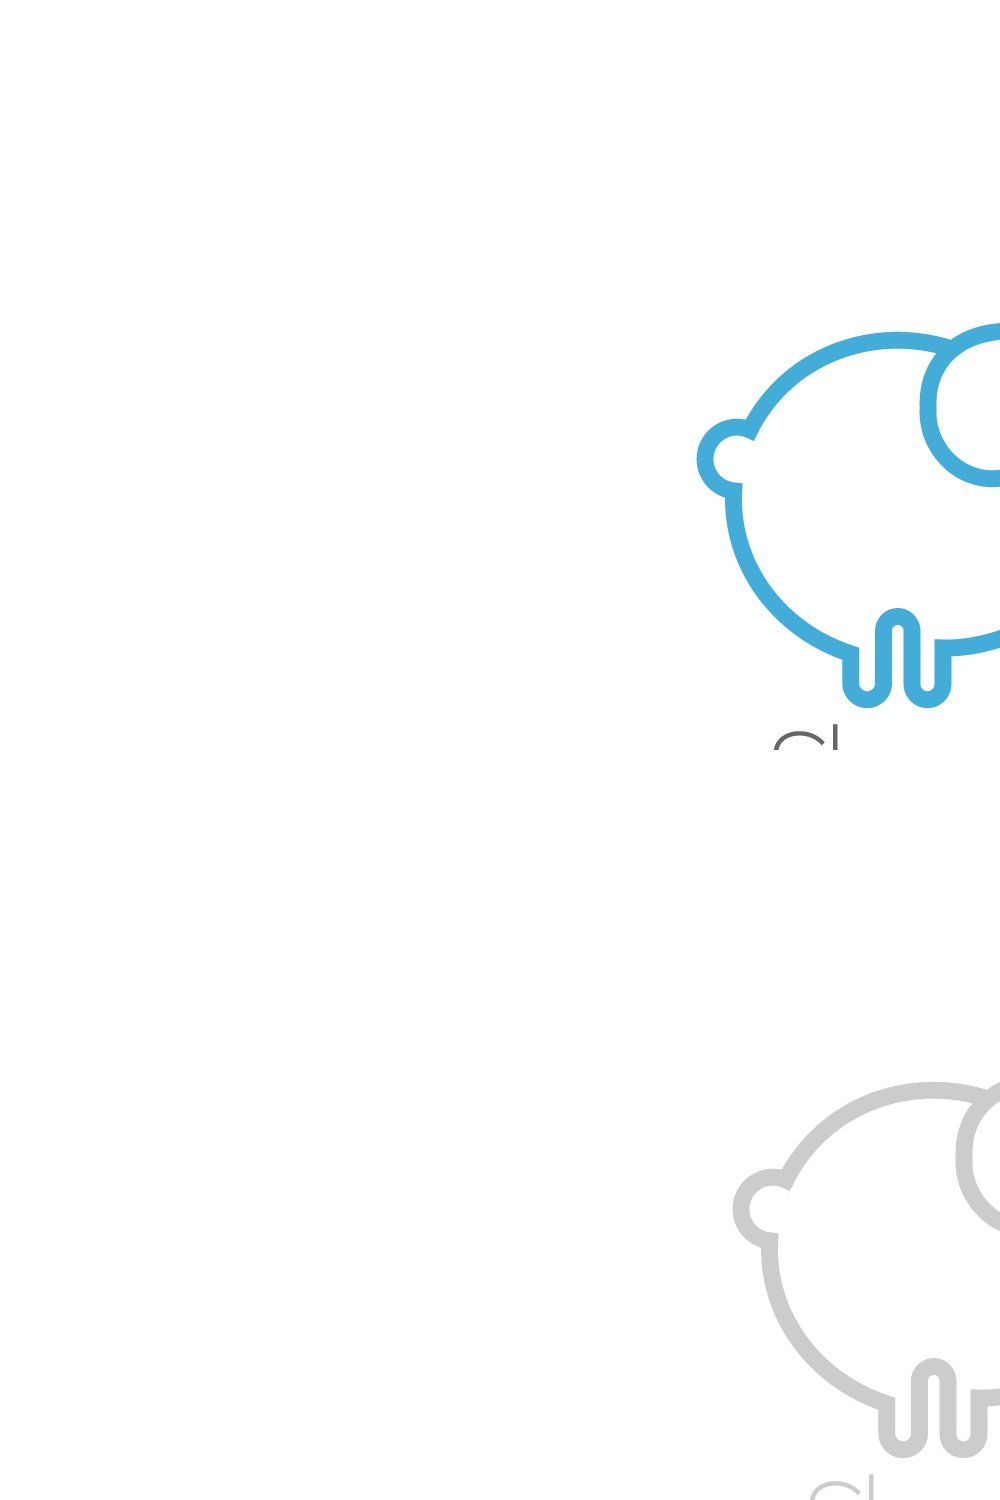 Sheep logo pinterest preview image.